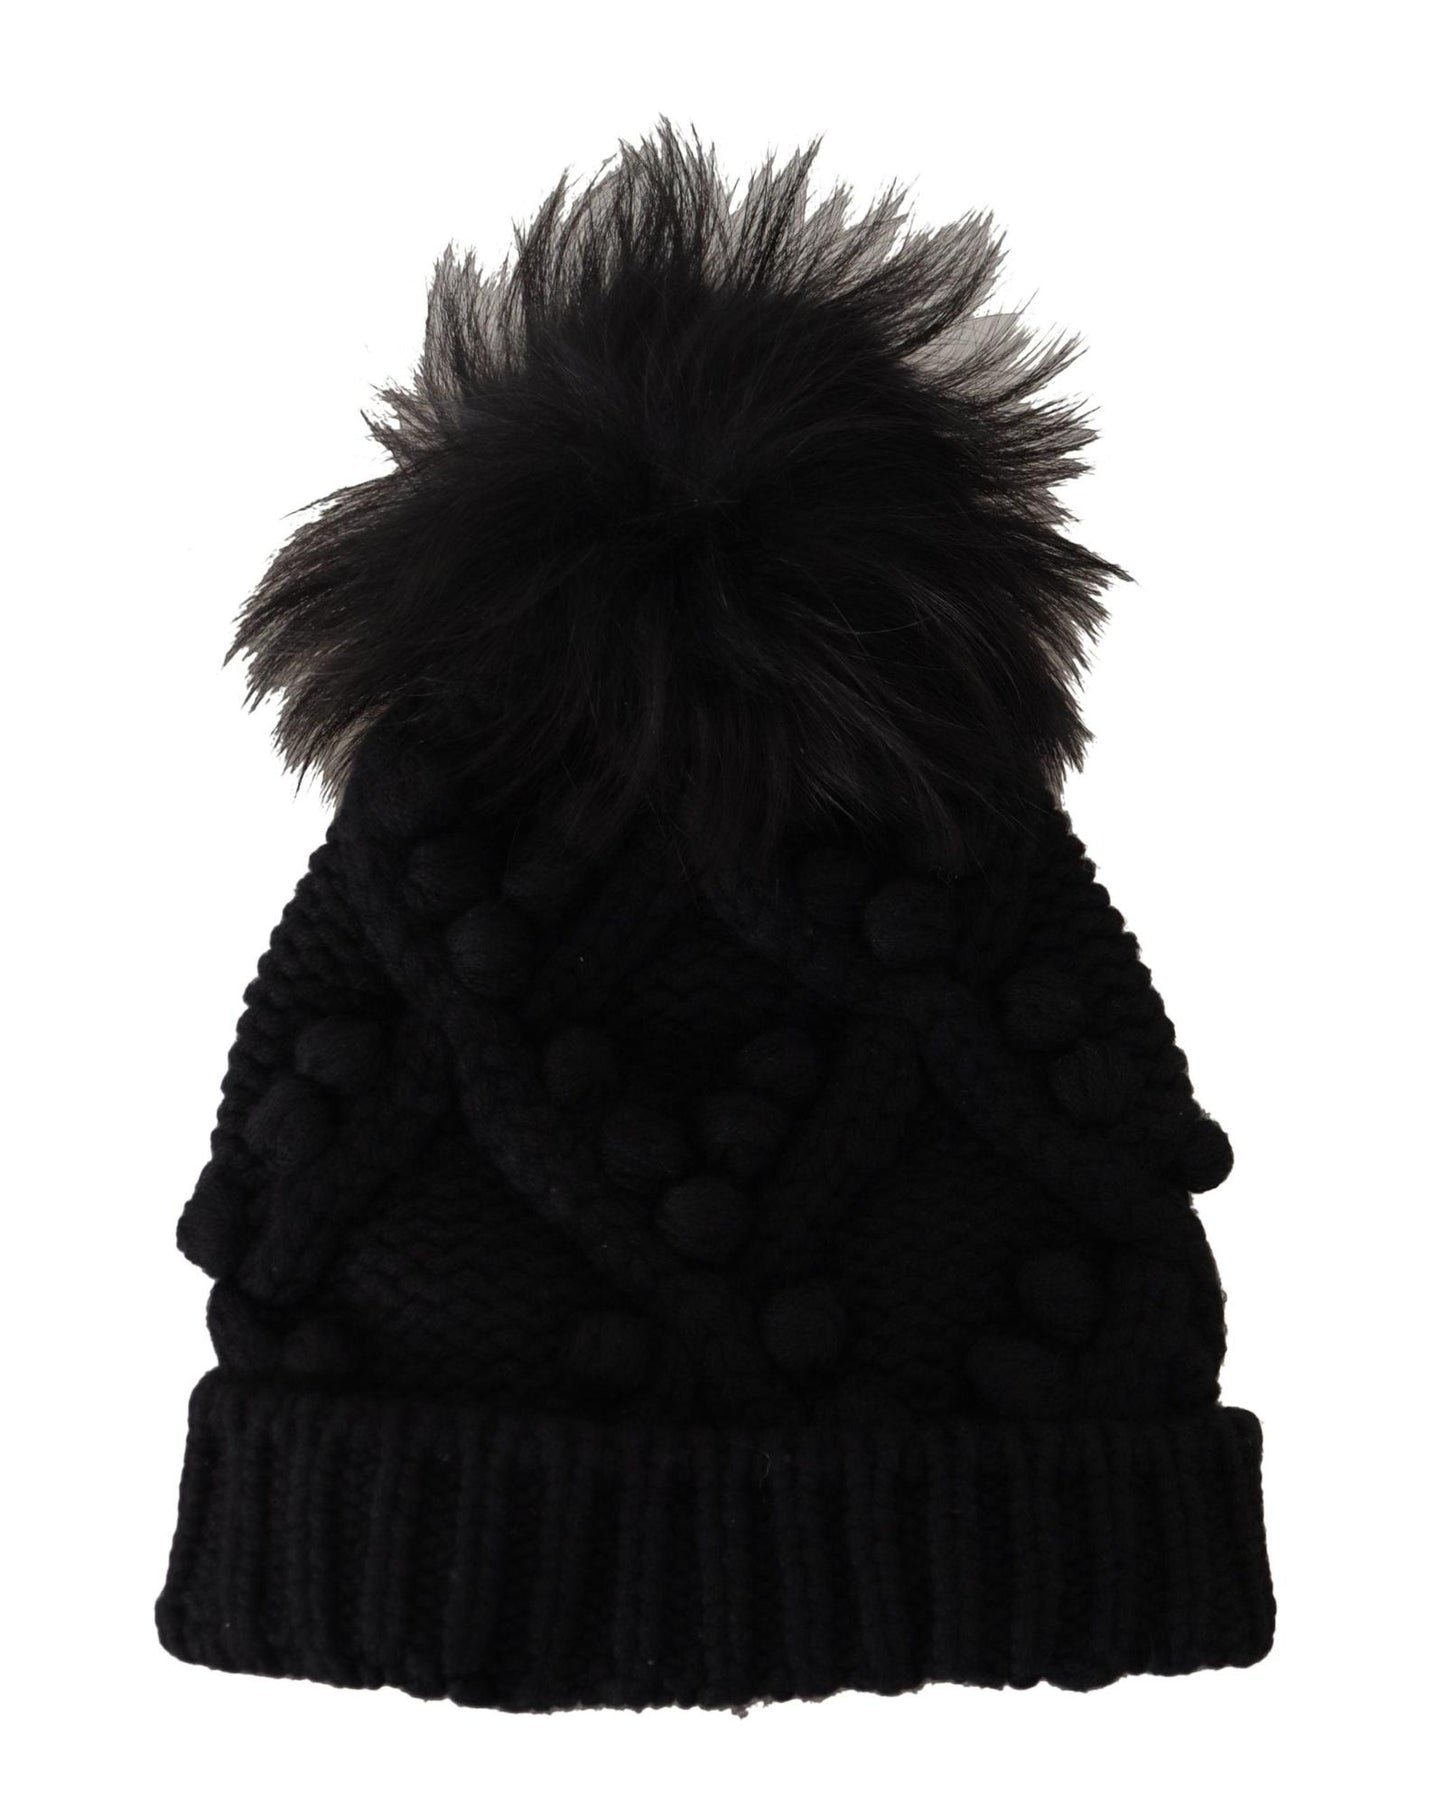 Cozy Cable Knit Pom-Pom Hat